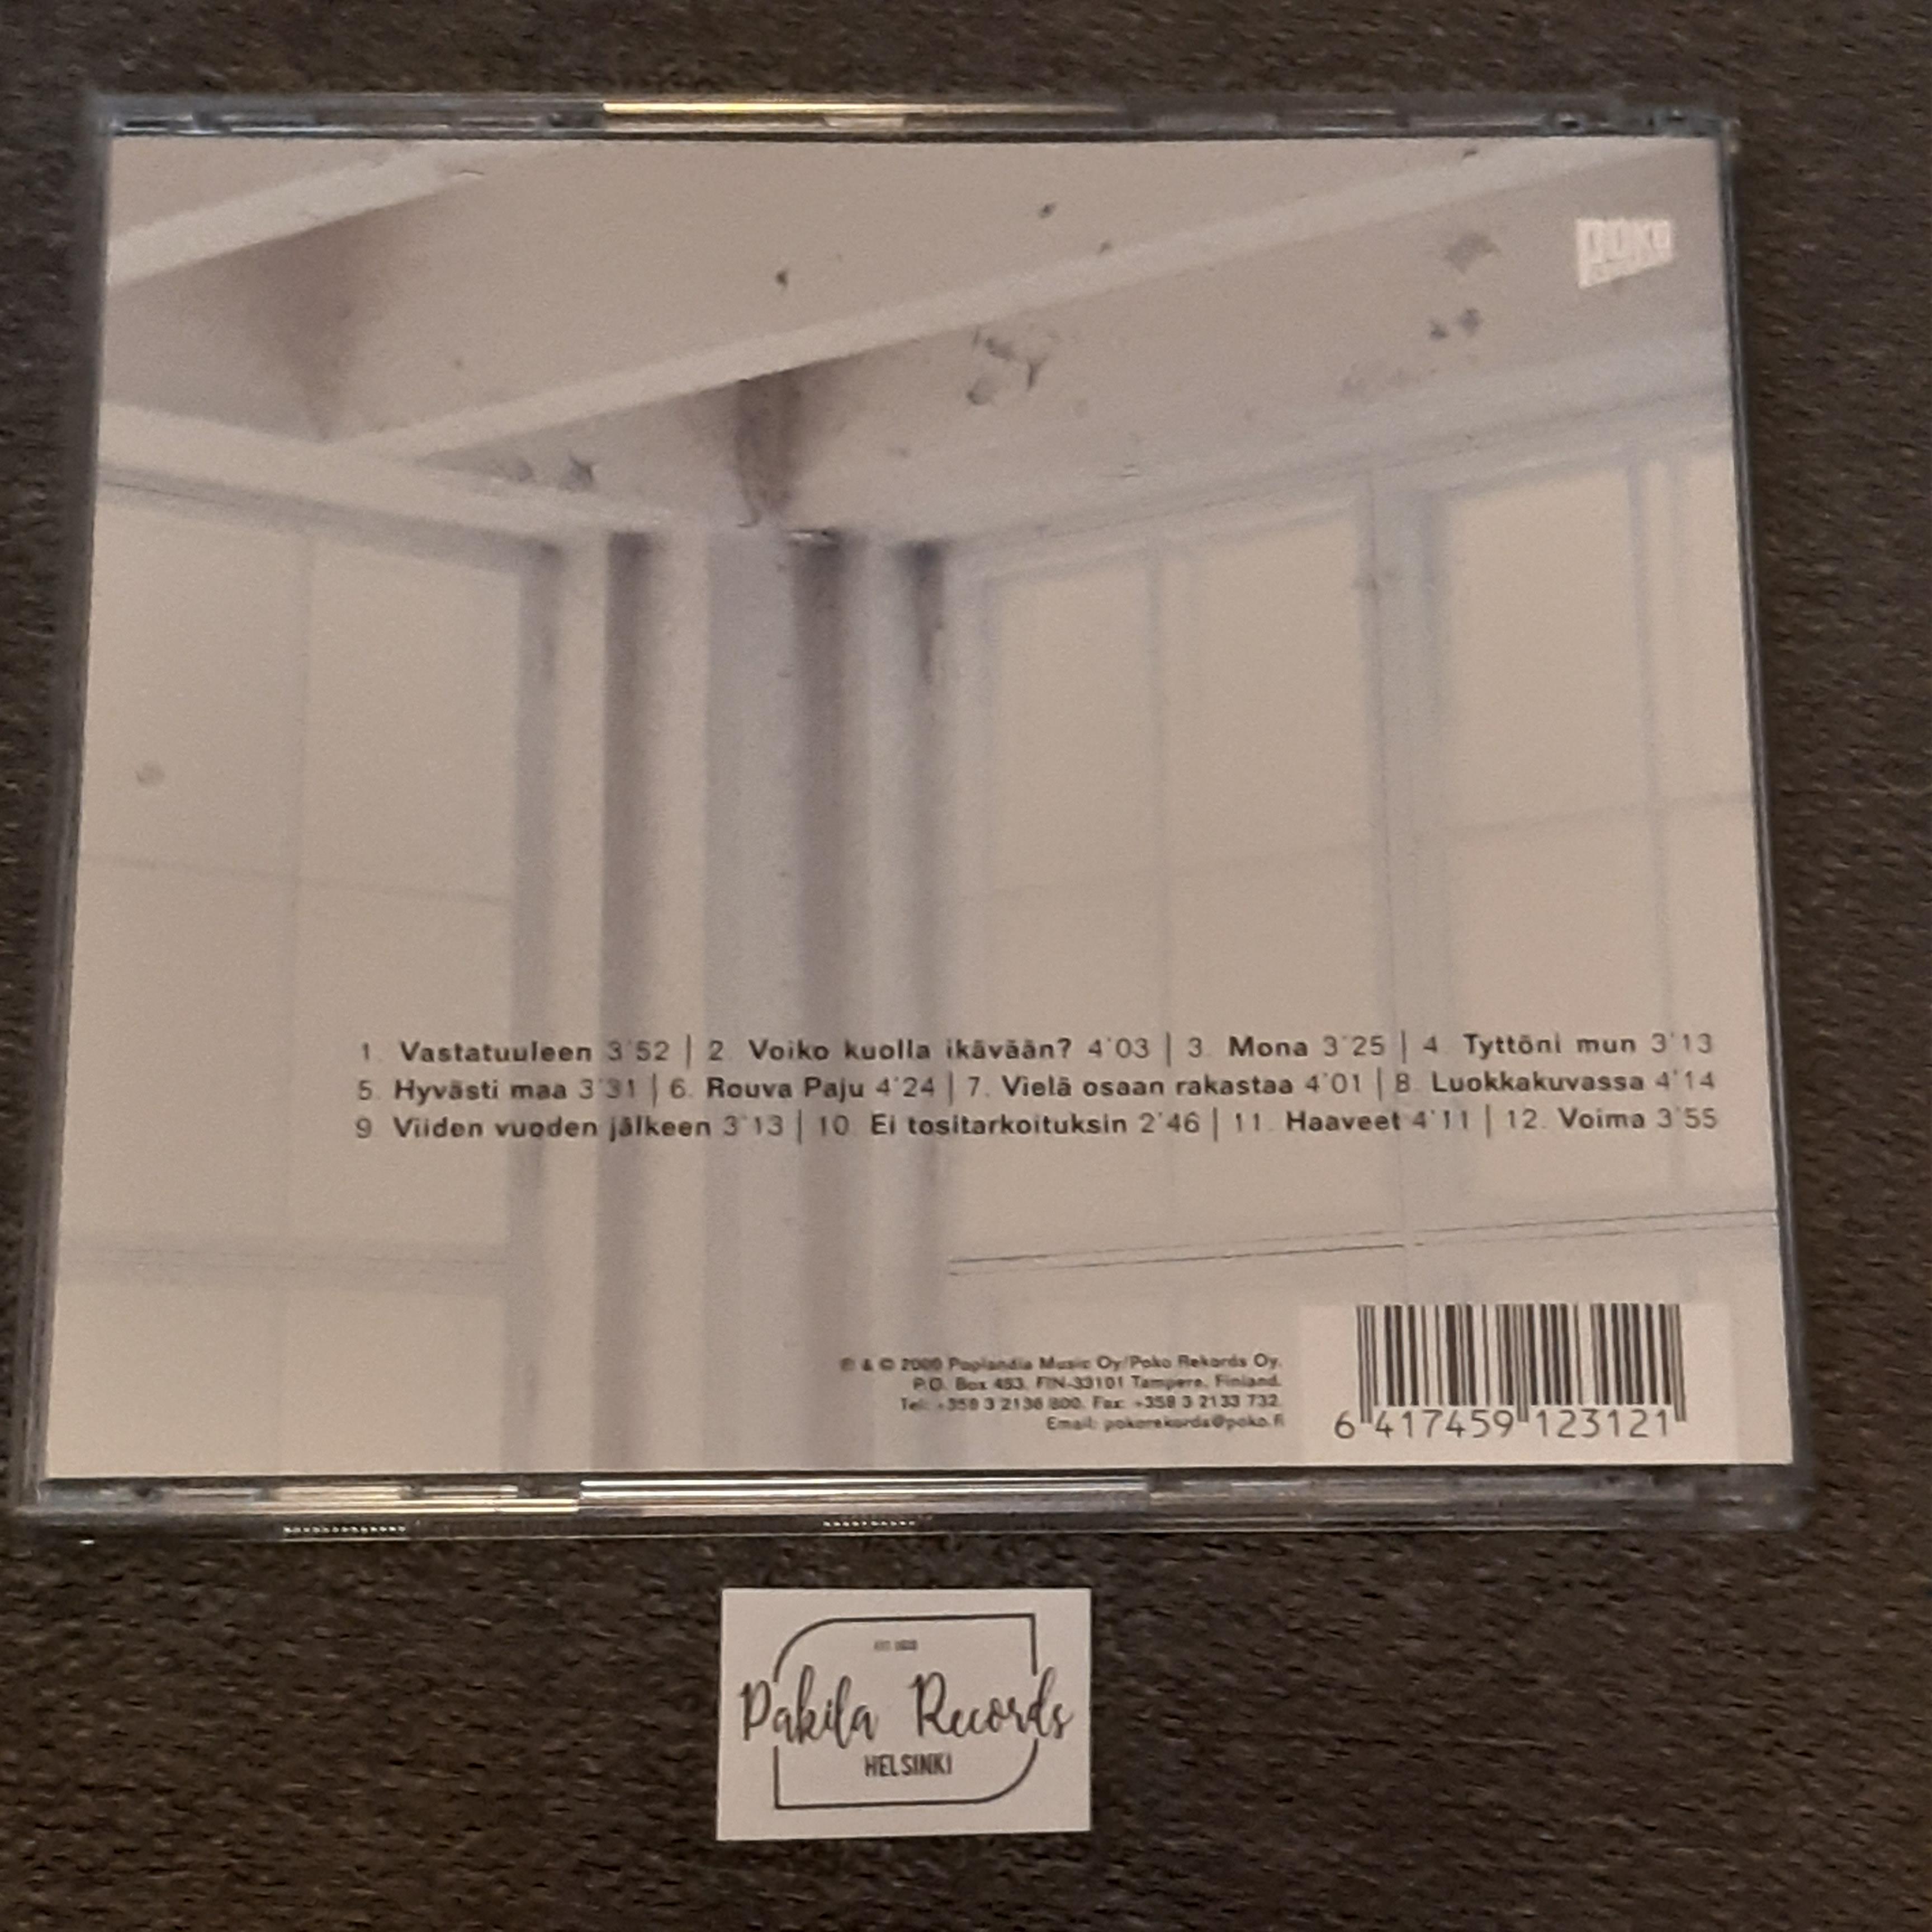 Olli Lindholm - Voima - CD (käytetty)